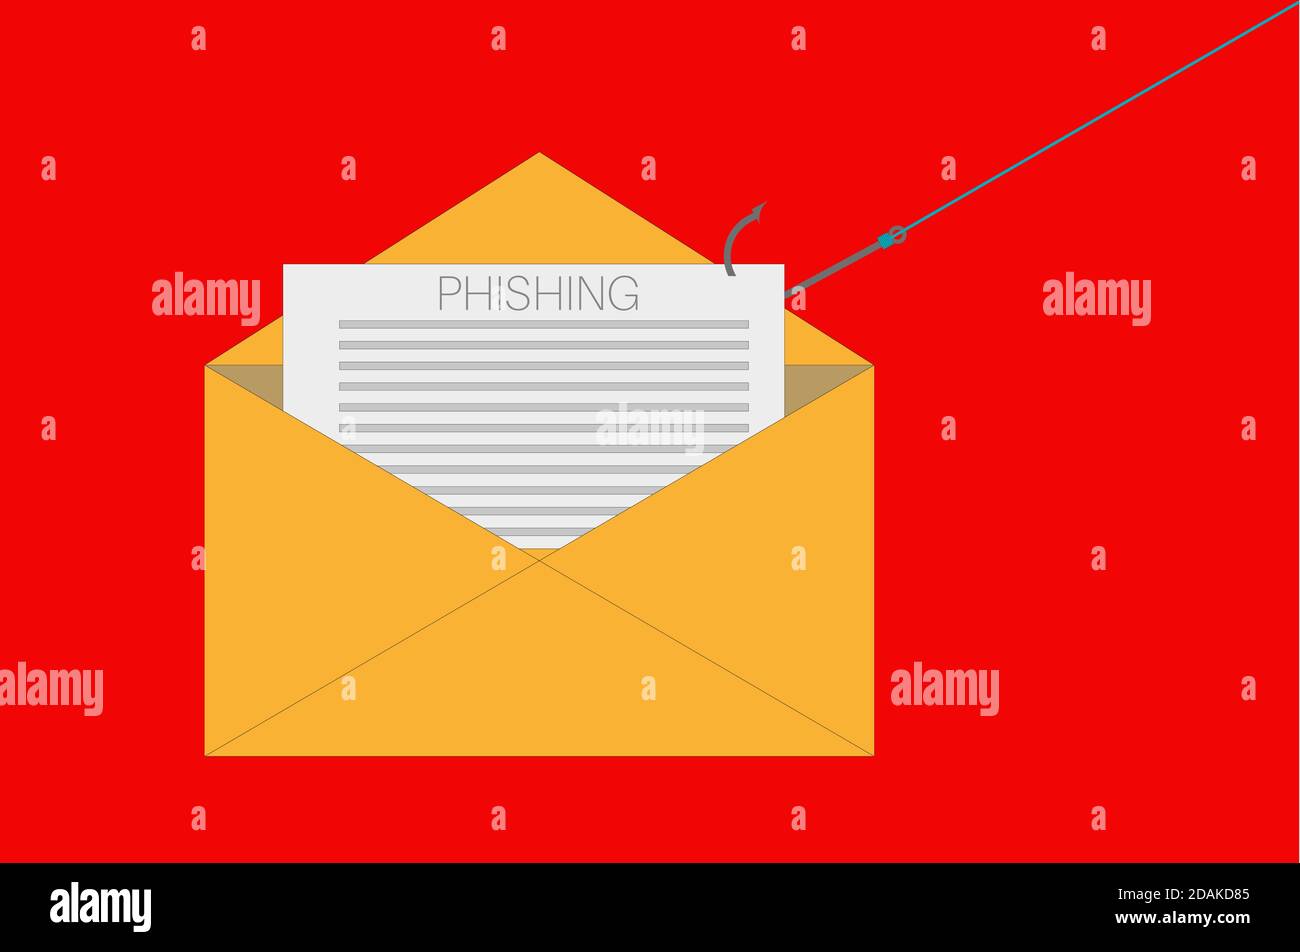 Phishing-E-Mail-Vektorgrafik auf rotem Hintergrund Stock Vektor